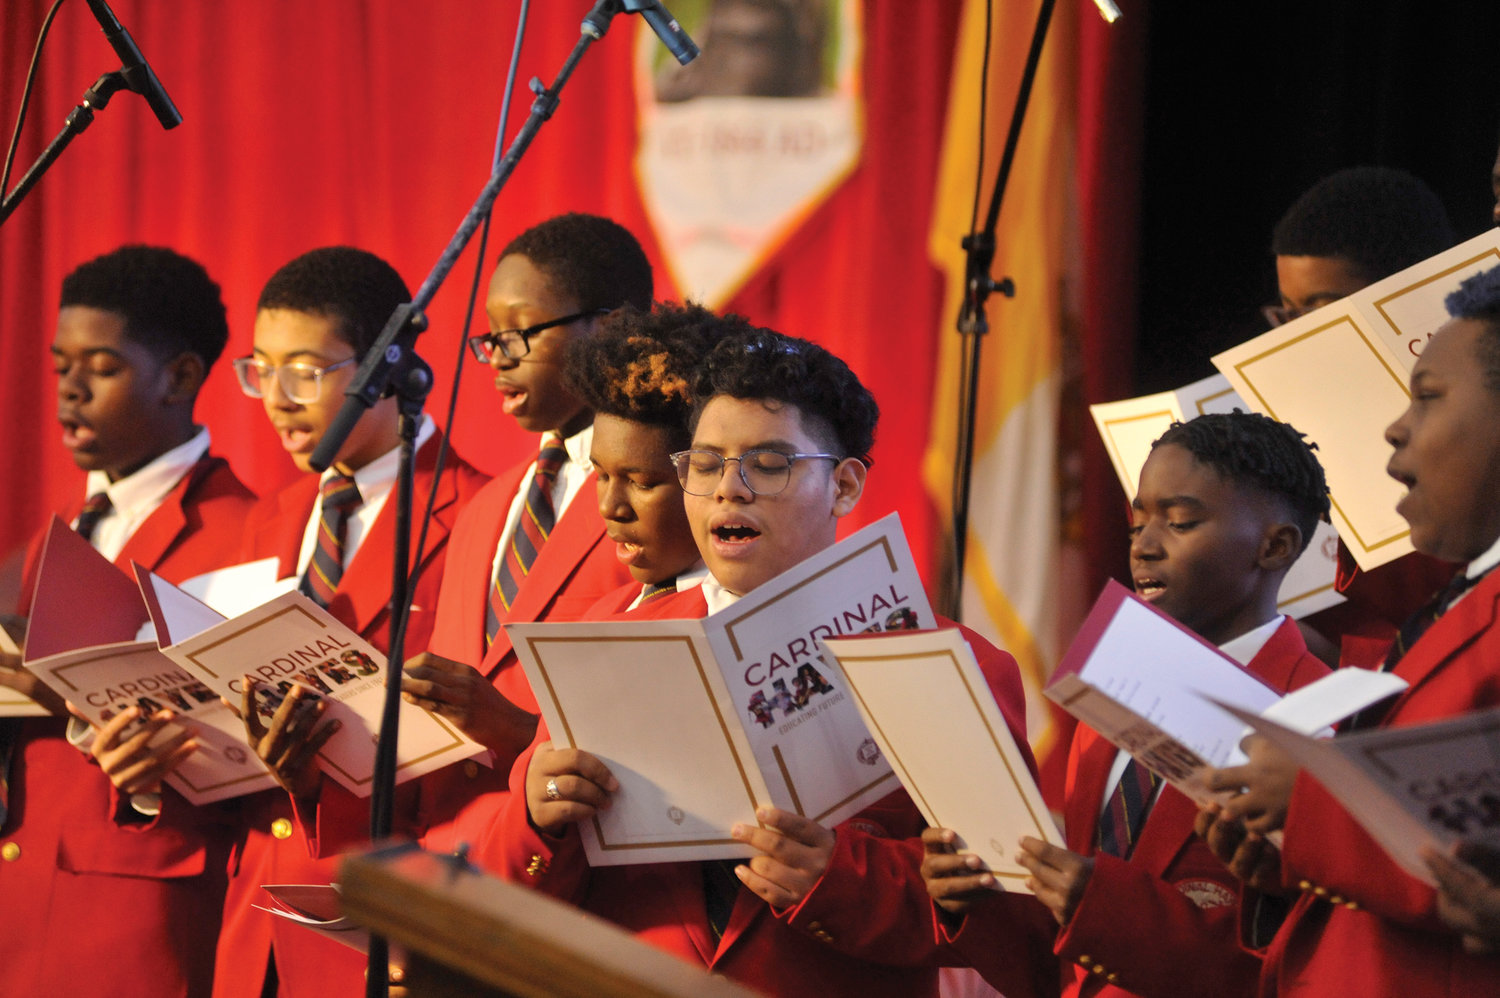 The Cardinal Hayes High School choir sings at Mass.